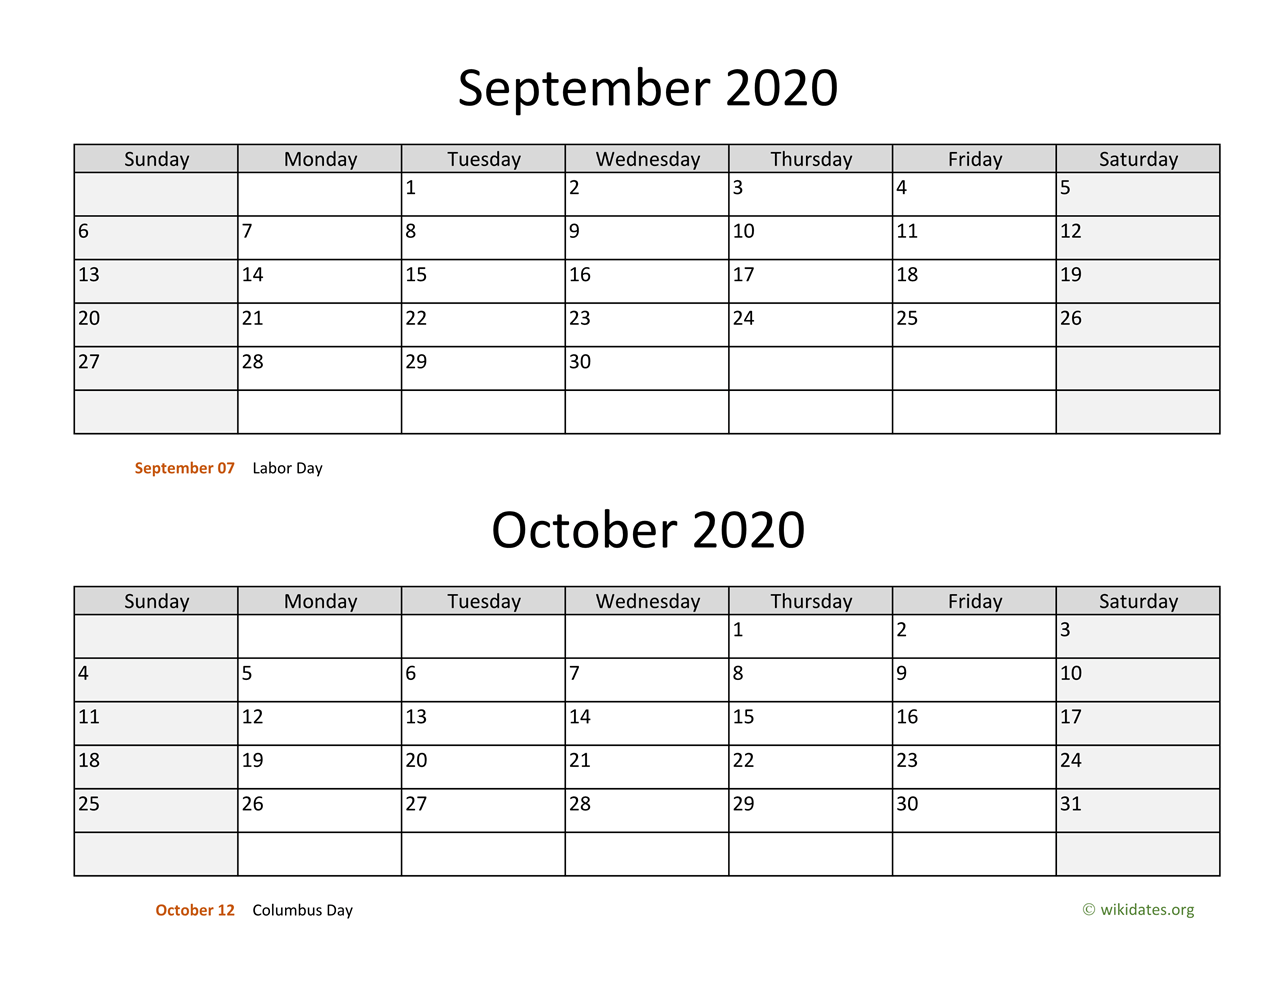 September and October 2020 Calendar